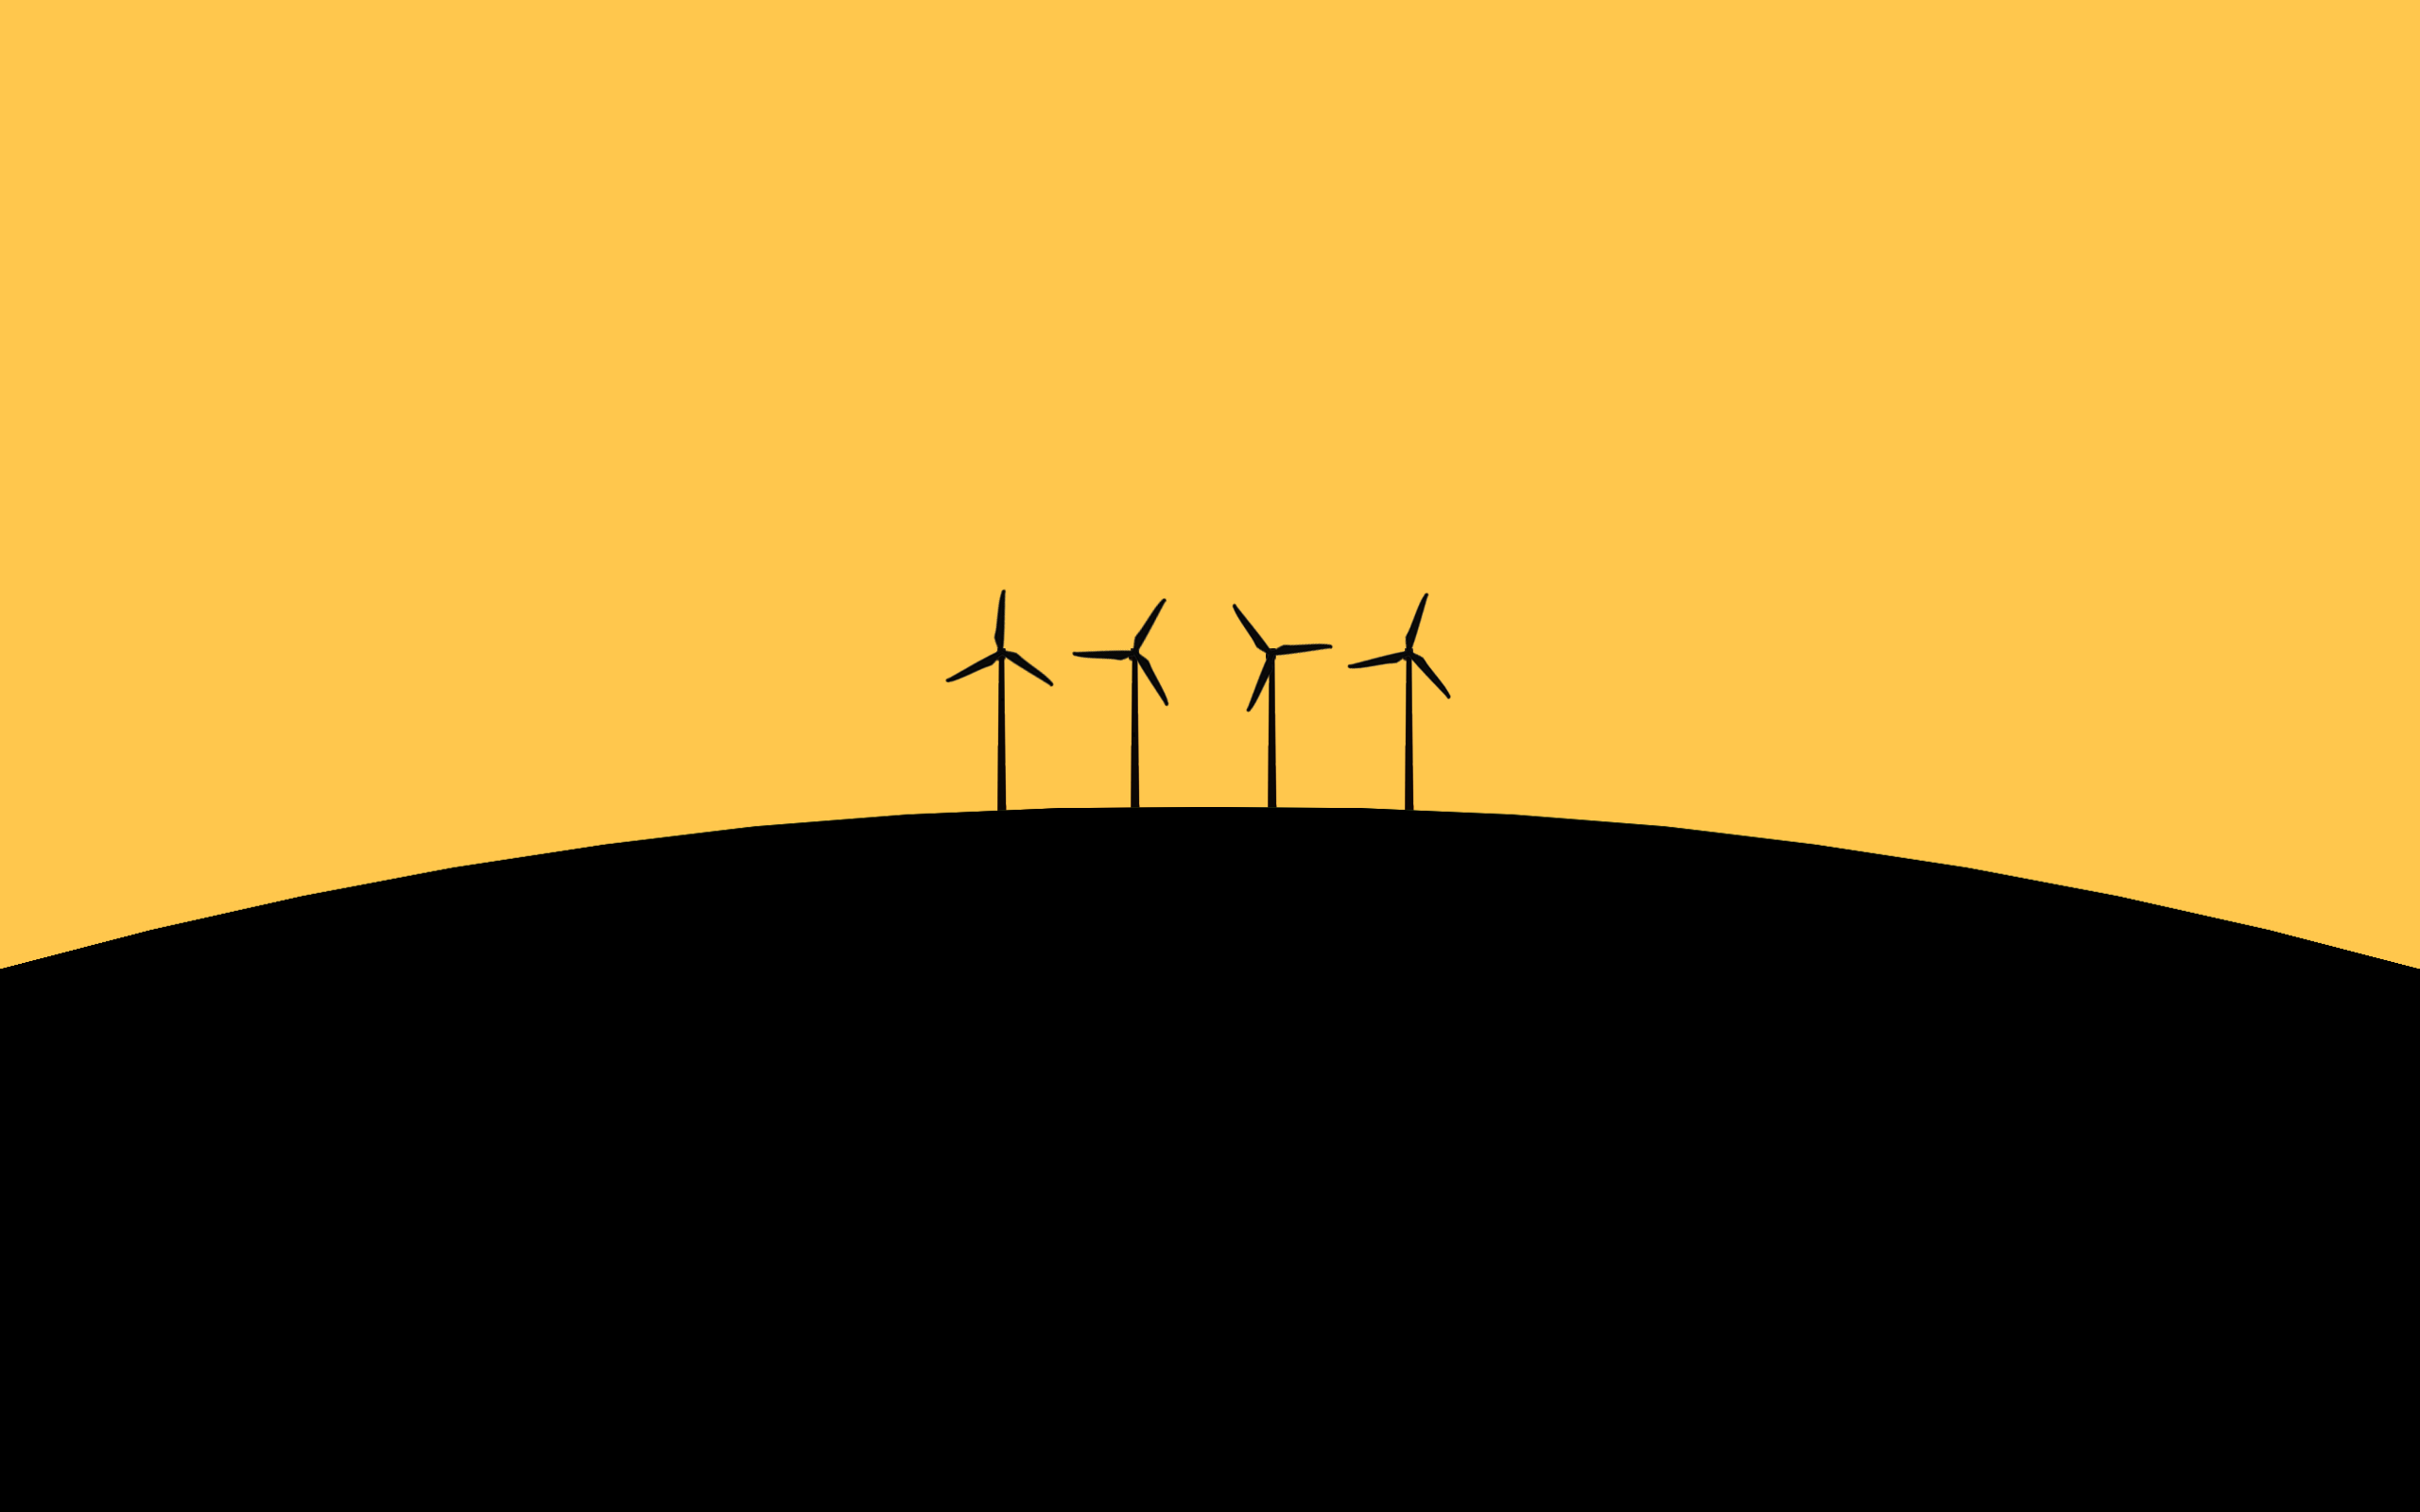 General 2560x1600 minimalism black yellow simple background wind turbine artwork yellow background